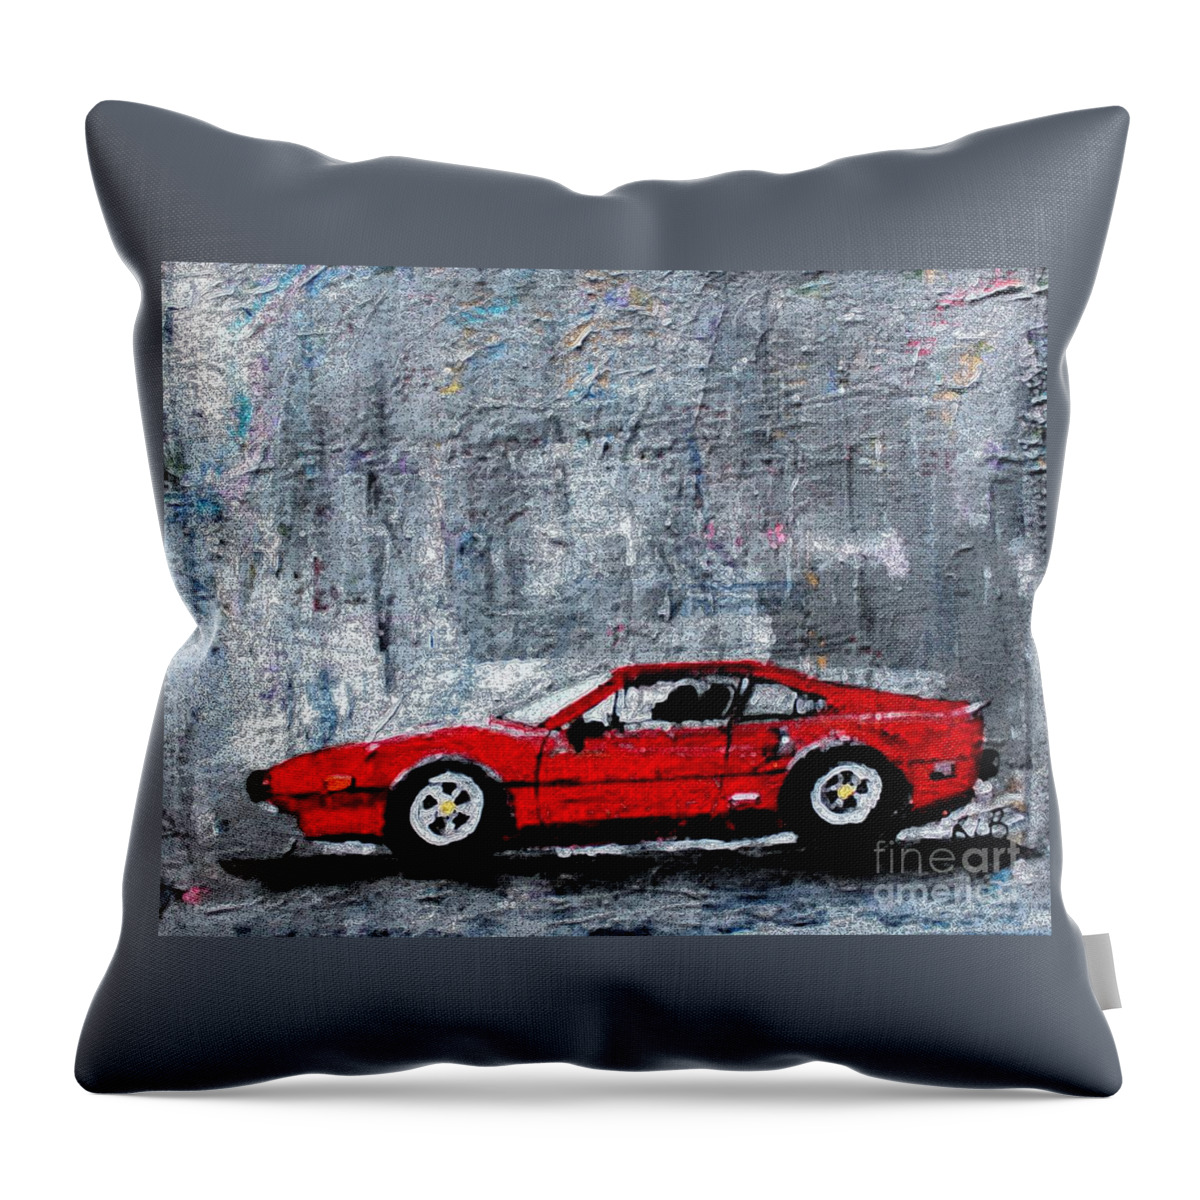 Ferrari Throw Pillow featuring the painting A Rainy Day in the Ferrari by Rita Brown